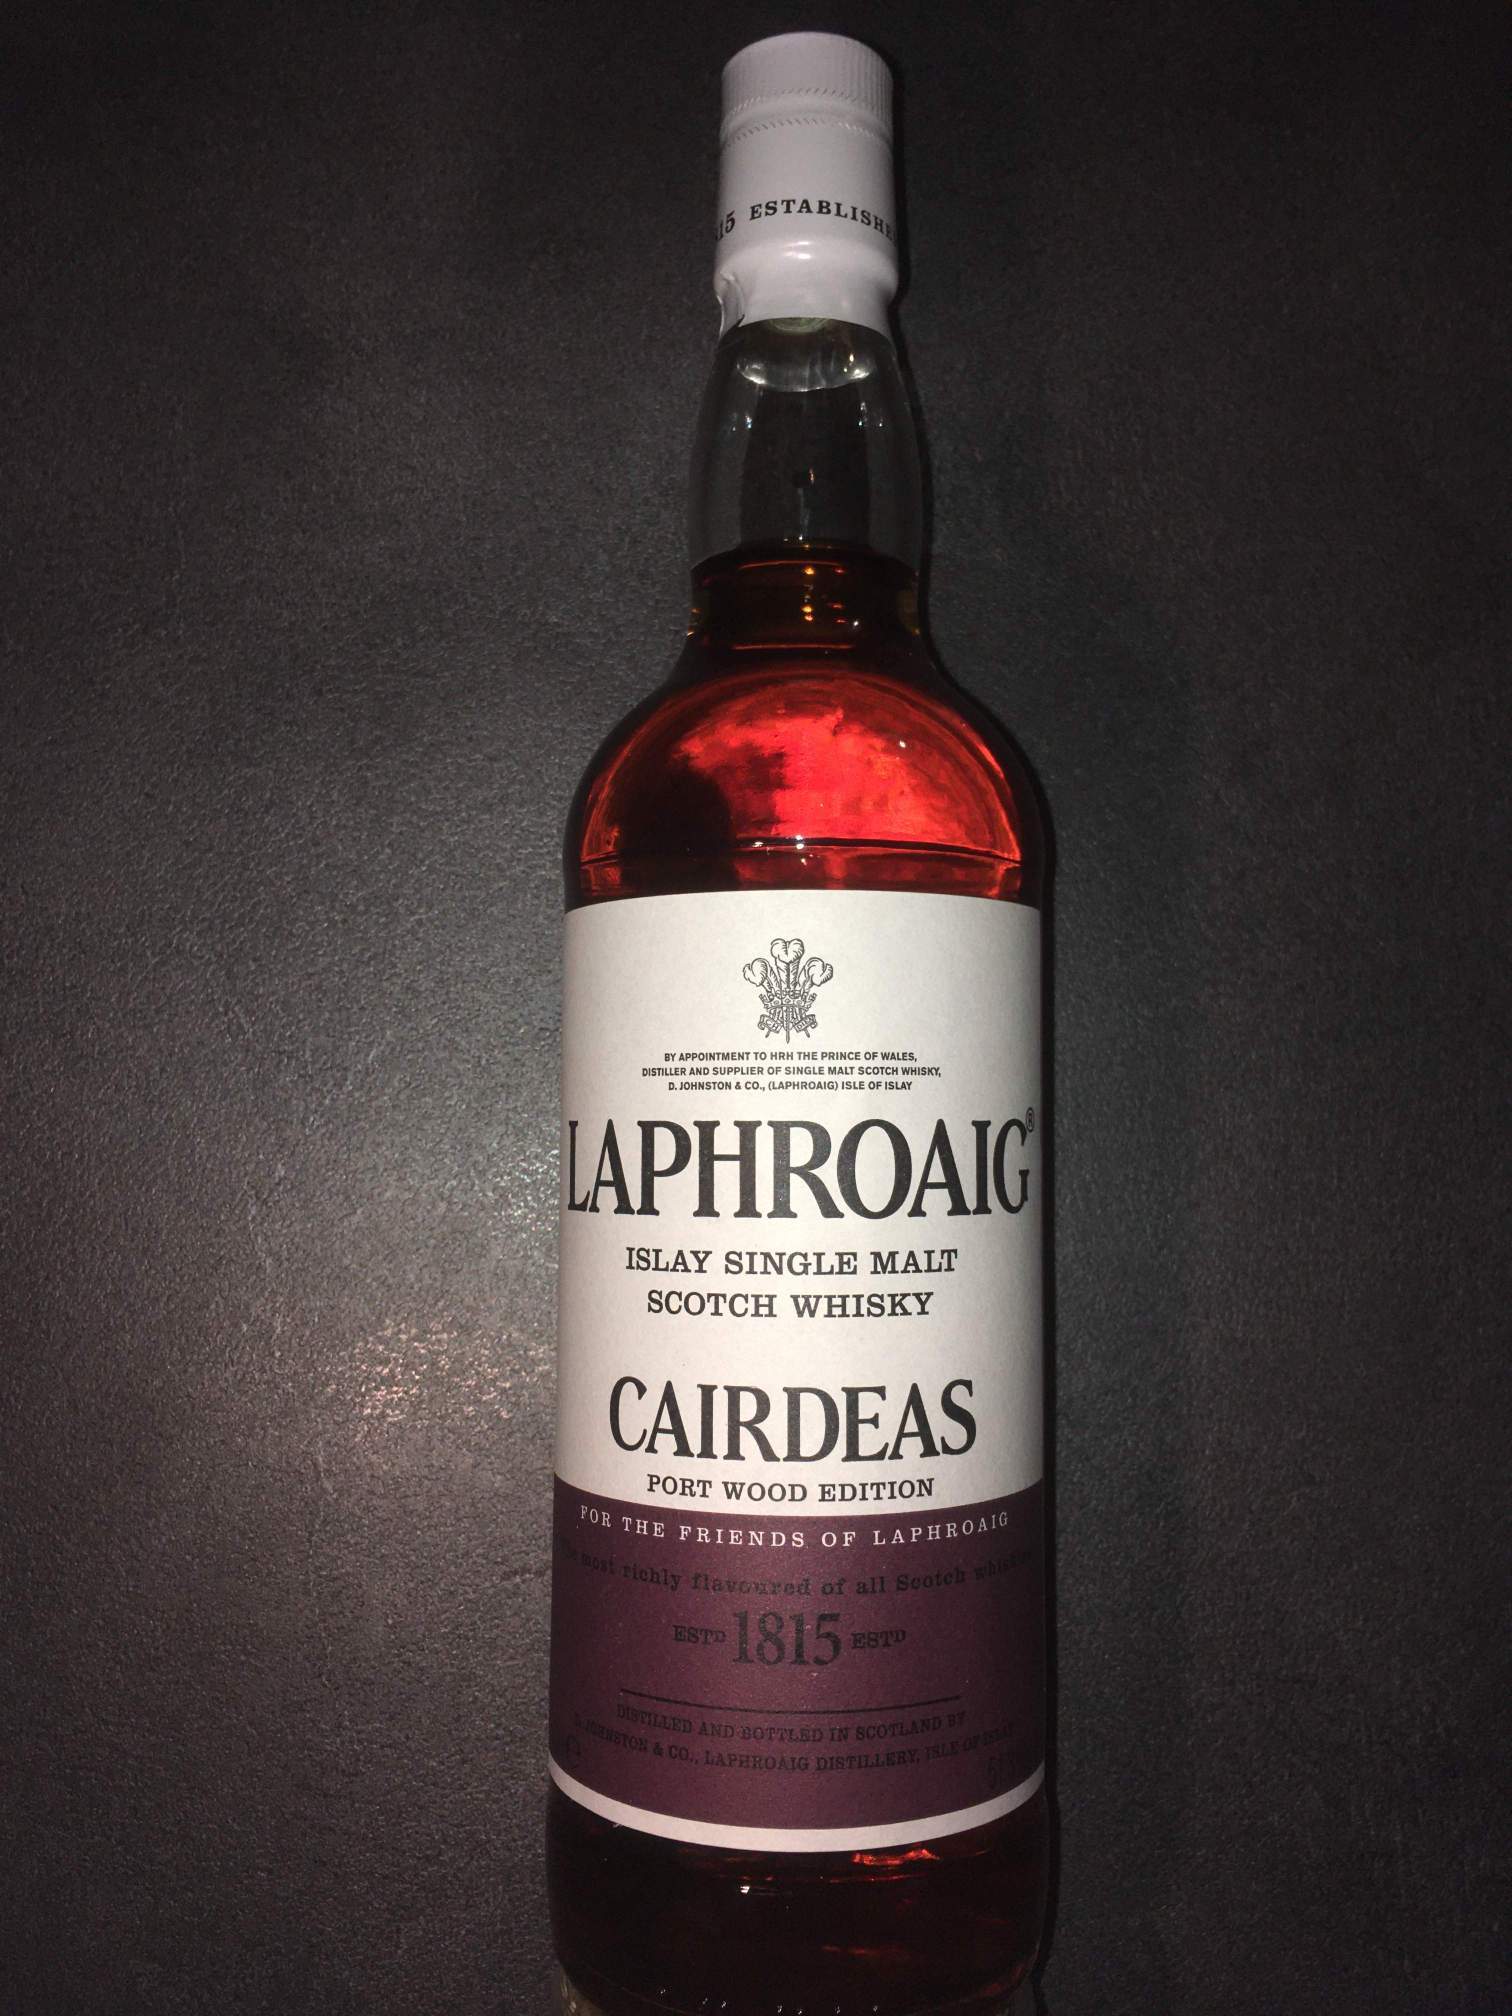 Laphroaig Cairdeas 2013 lleach Edition - Feis Ile 2013 - Port Wood Edition - UK-Bottling